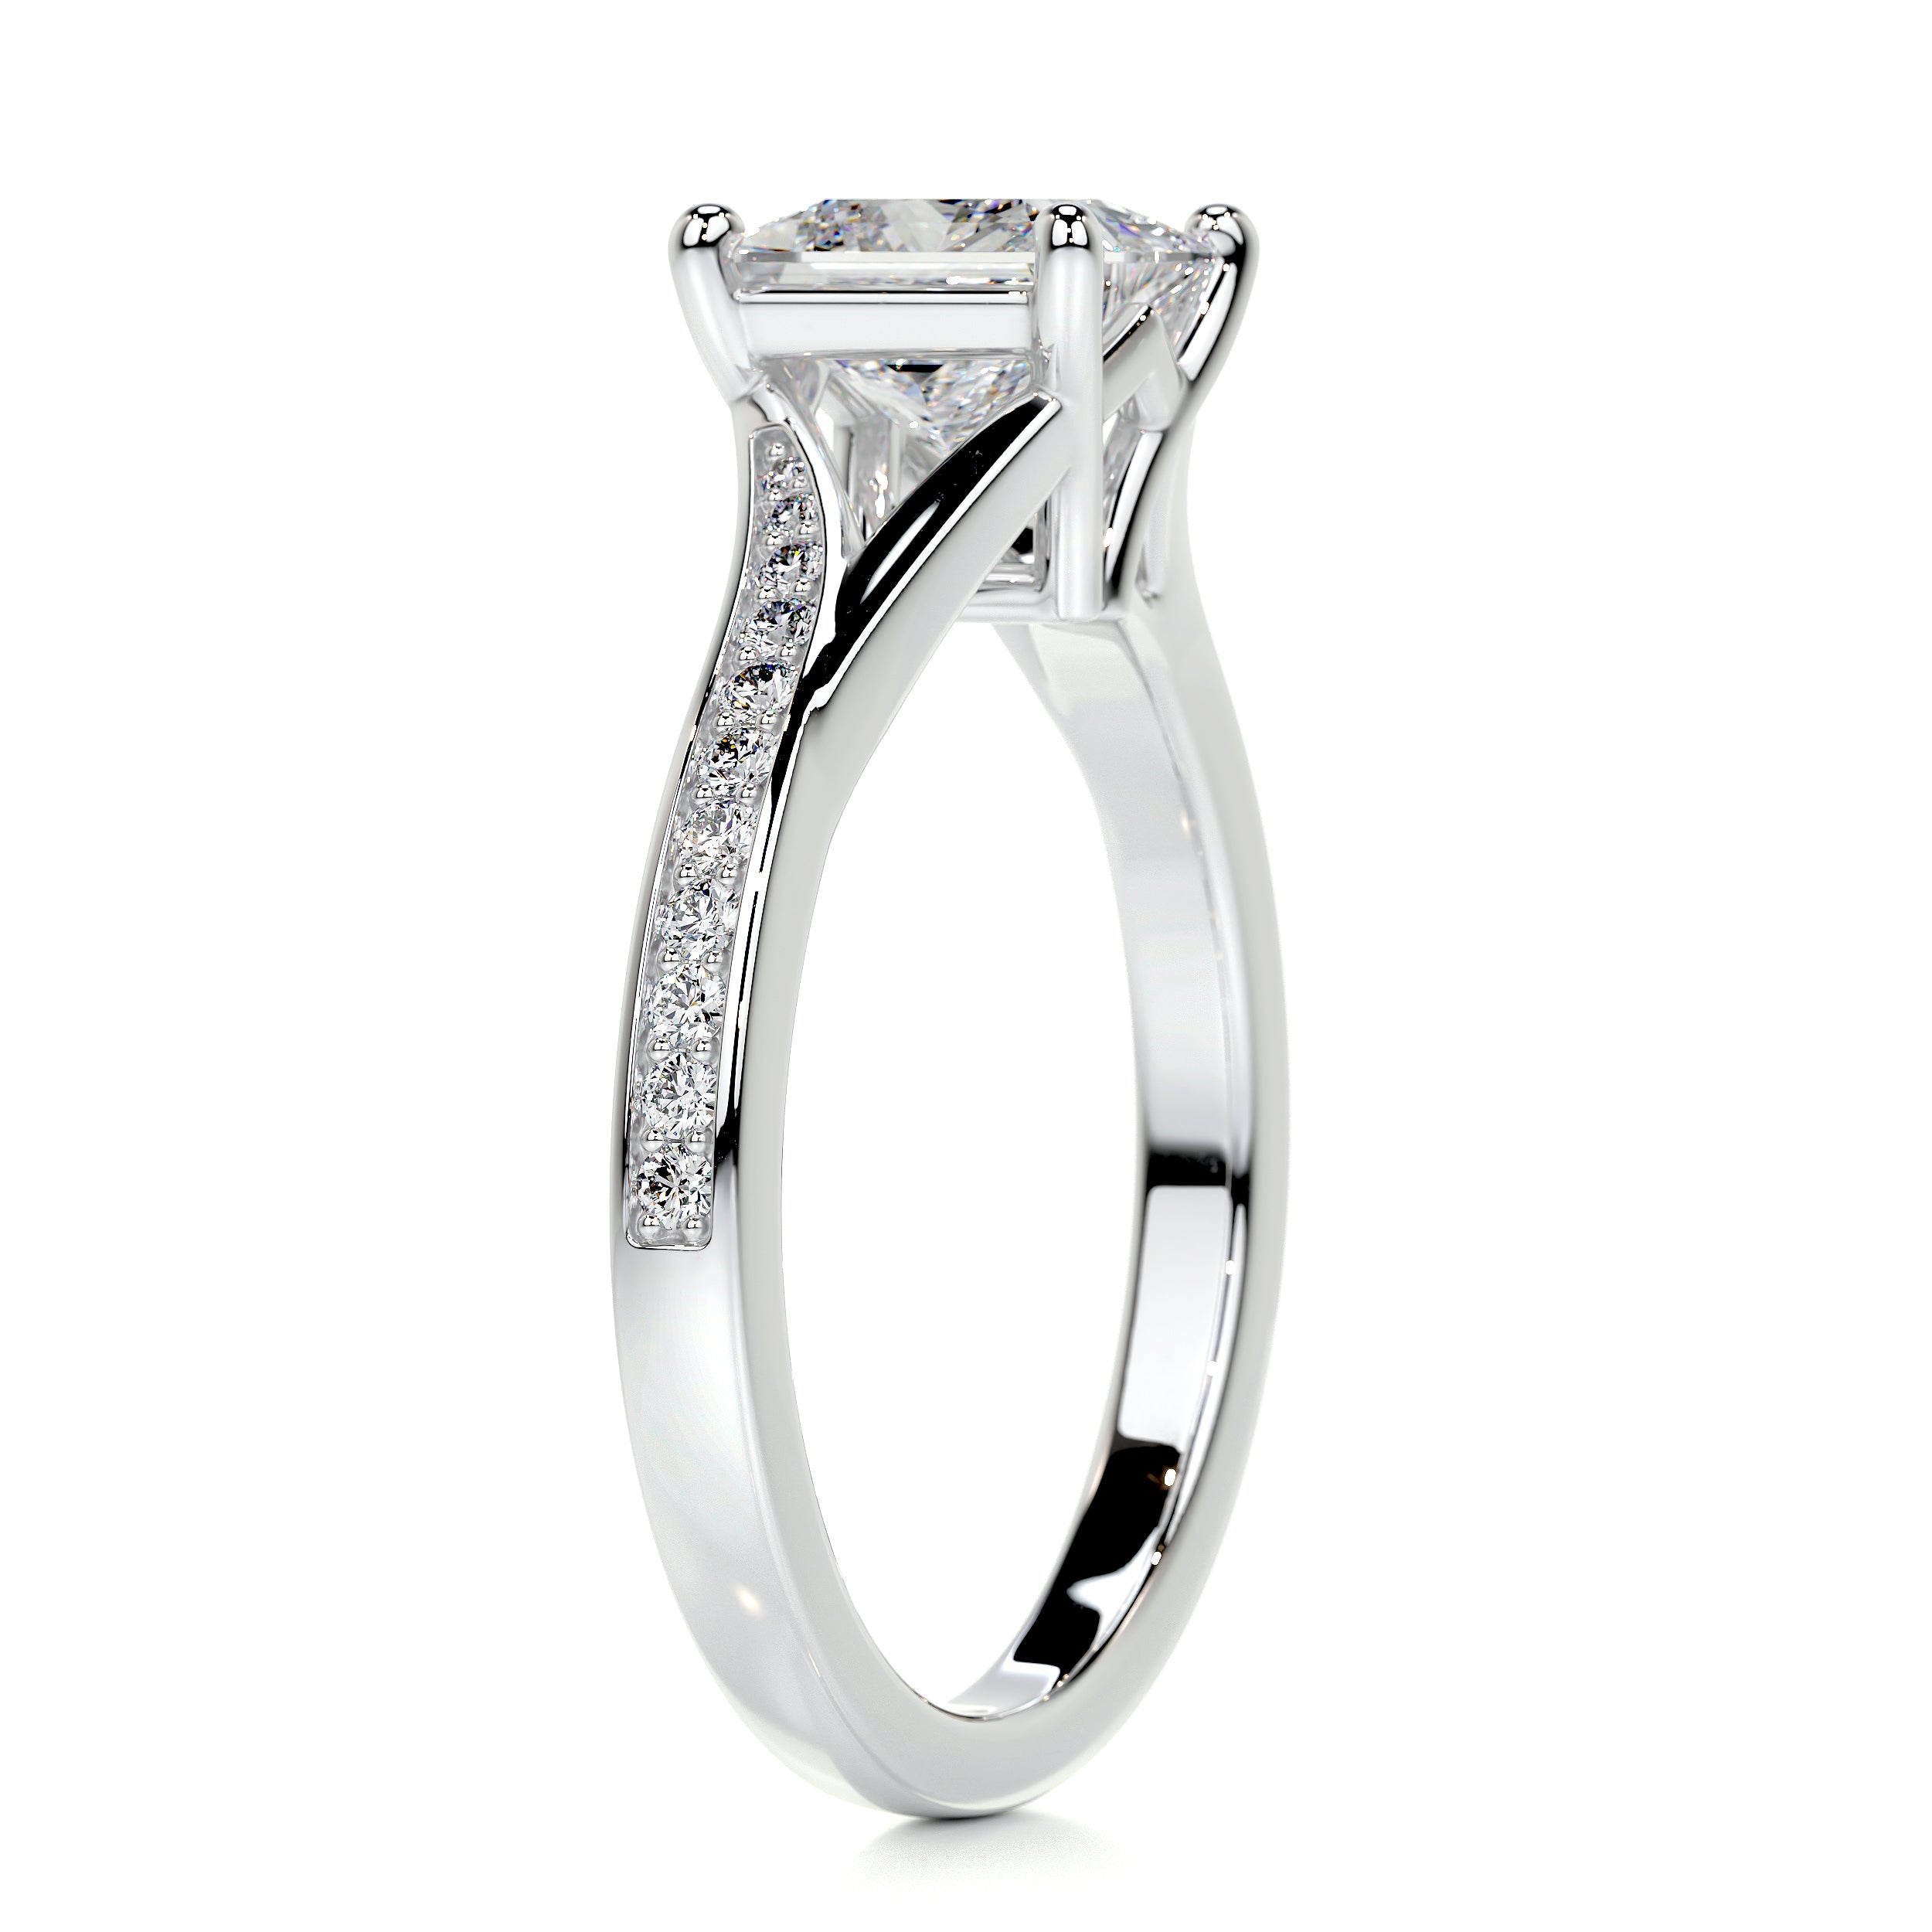 Alexandria Diamond Engagement Ring   (1.15 Carat) -14K White Gold